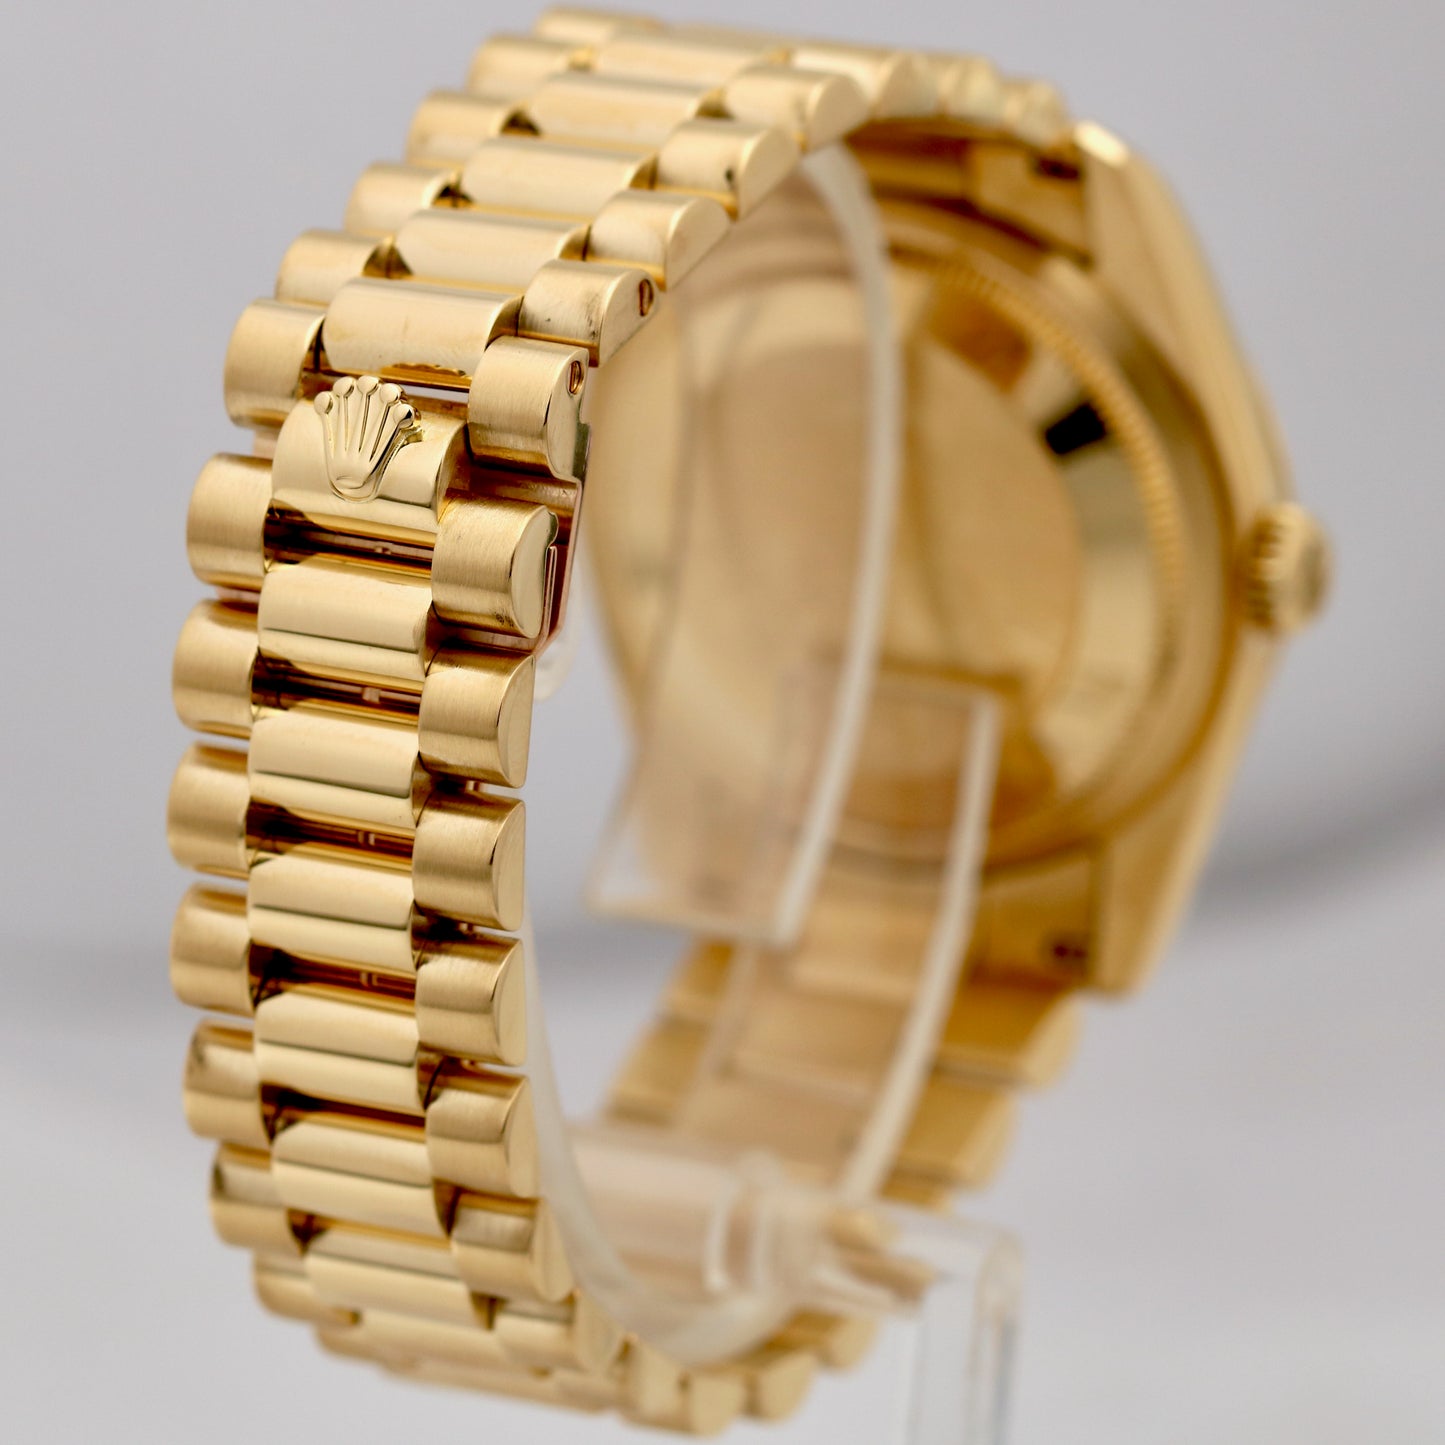 MINT Rolex Day-Date President HEAVY BAND 18K Gold DIAMOND 118238 36mm Watch